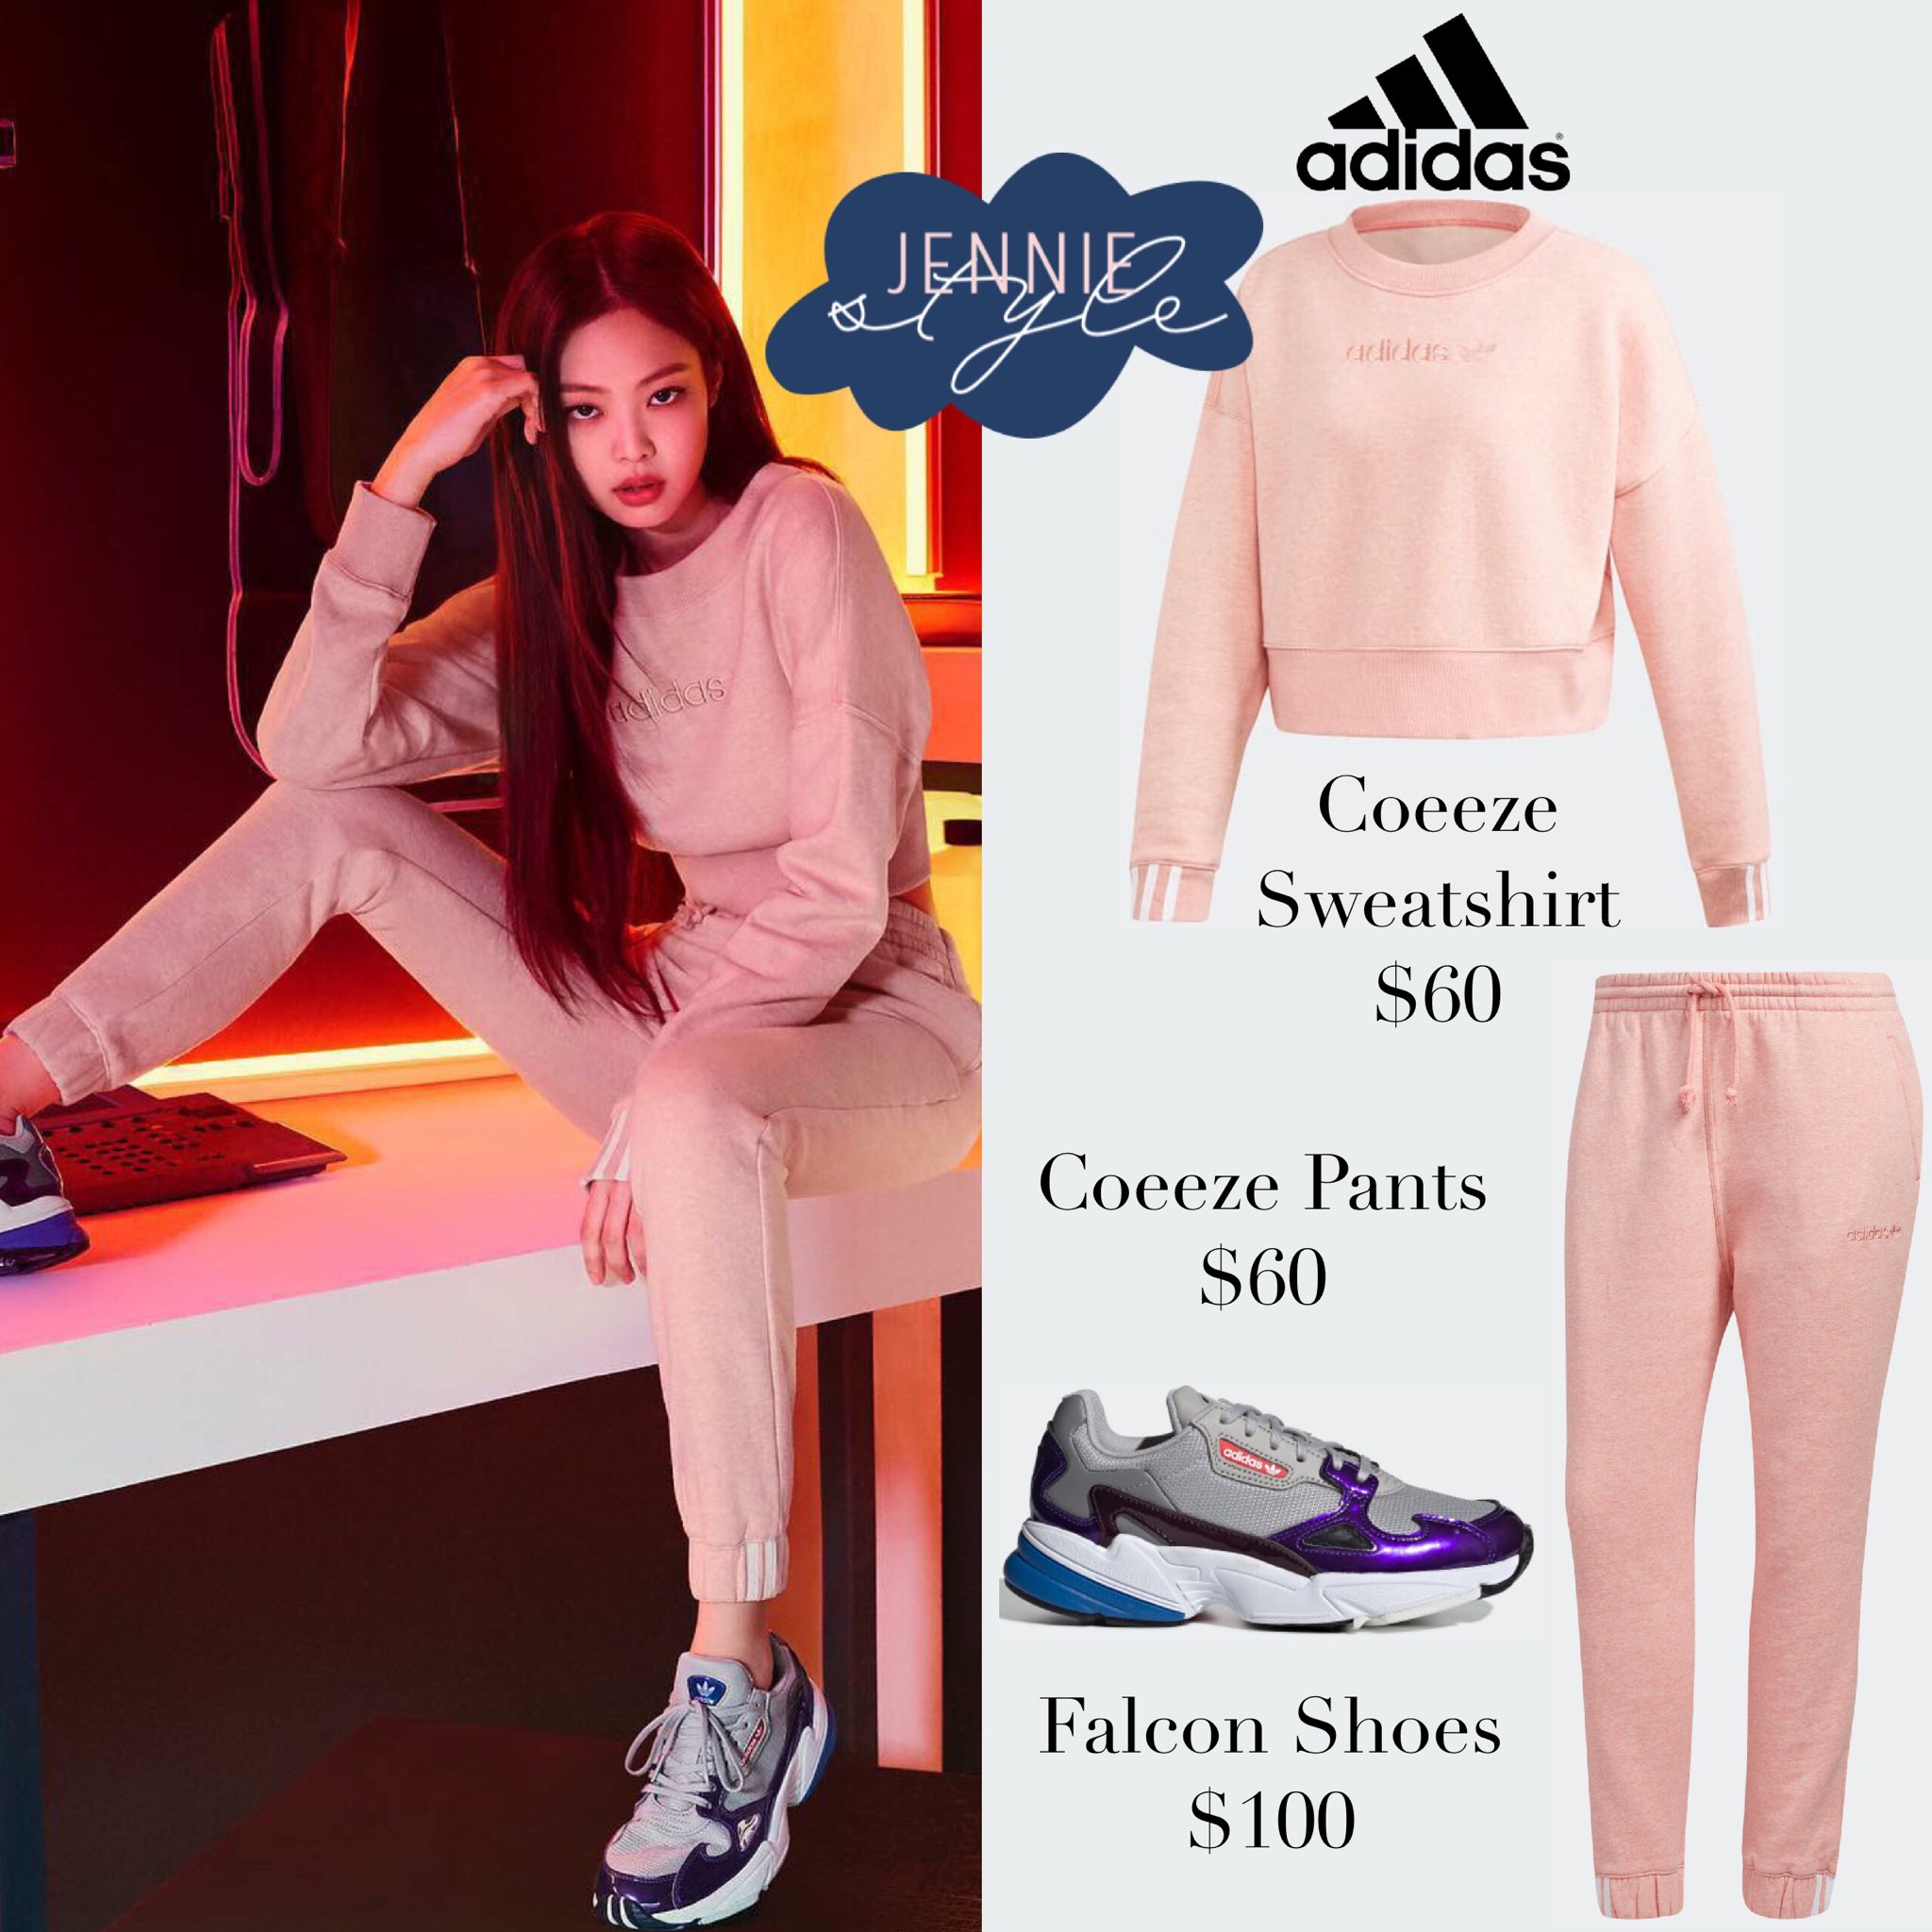 Jennie Style on Twitter: "Jennie for Adidas Korea Adidas Coeeze $60, Coeeze Pants Falcon $100 #jennie #jenniekim #blackpink #blackpinkfashion #blackpinkstyle #jenniestyle https://t.co/pAyFEV5jrM" / Twitter